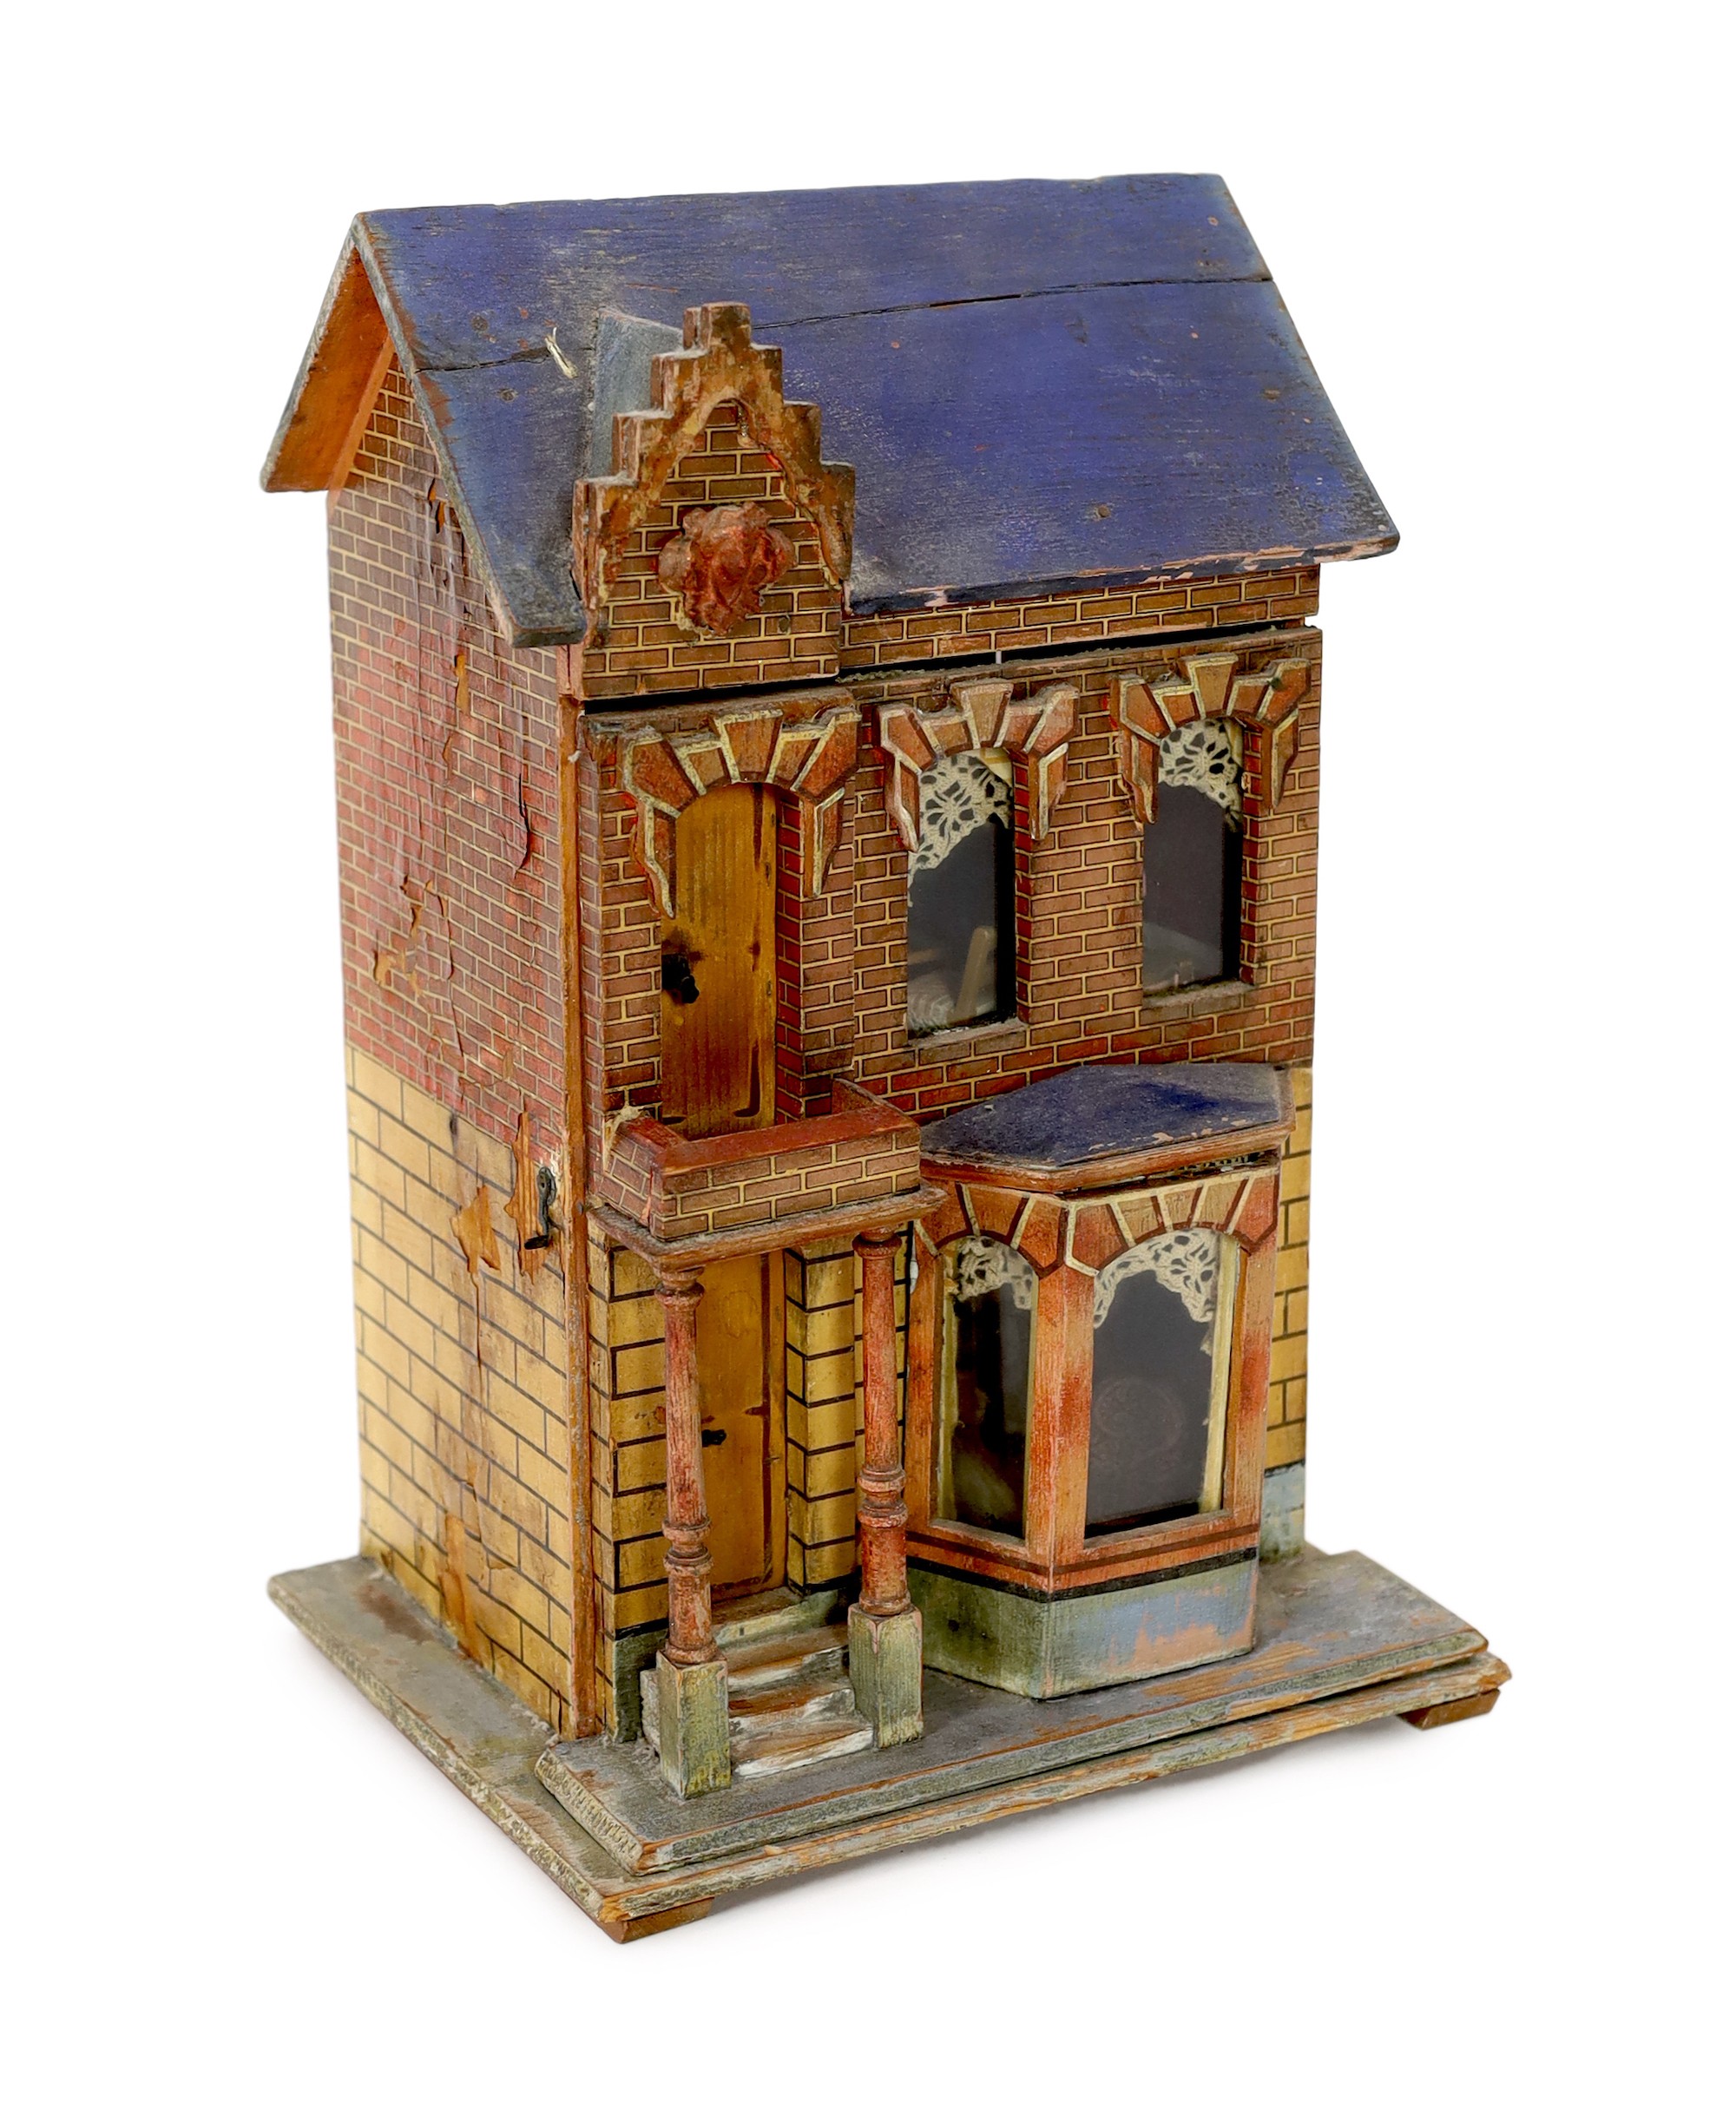 A Moritz Gottschalk 'Blue Roof’ furnished dolls’ house, circa 1880-85